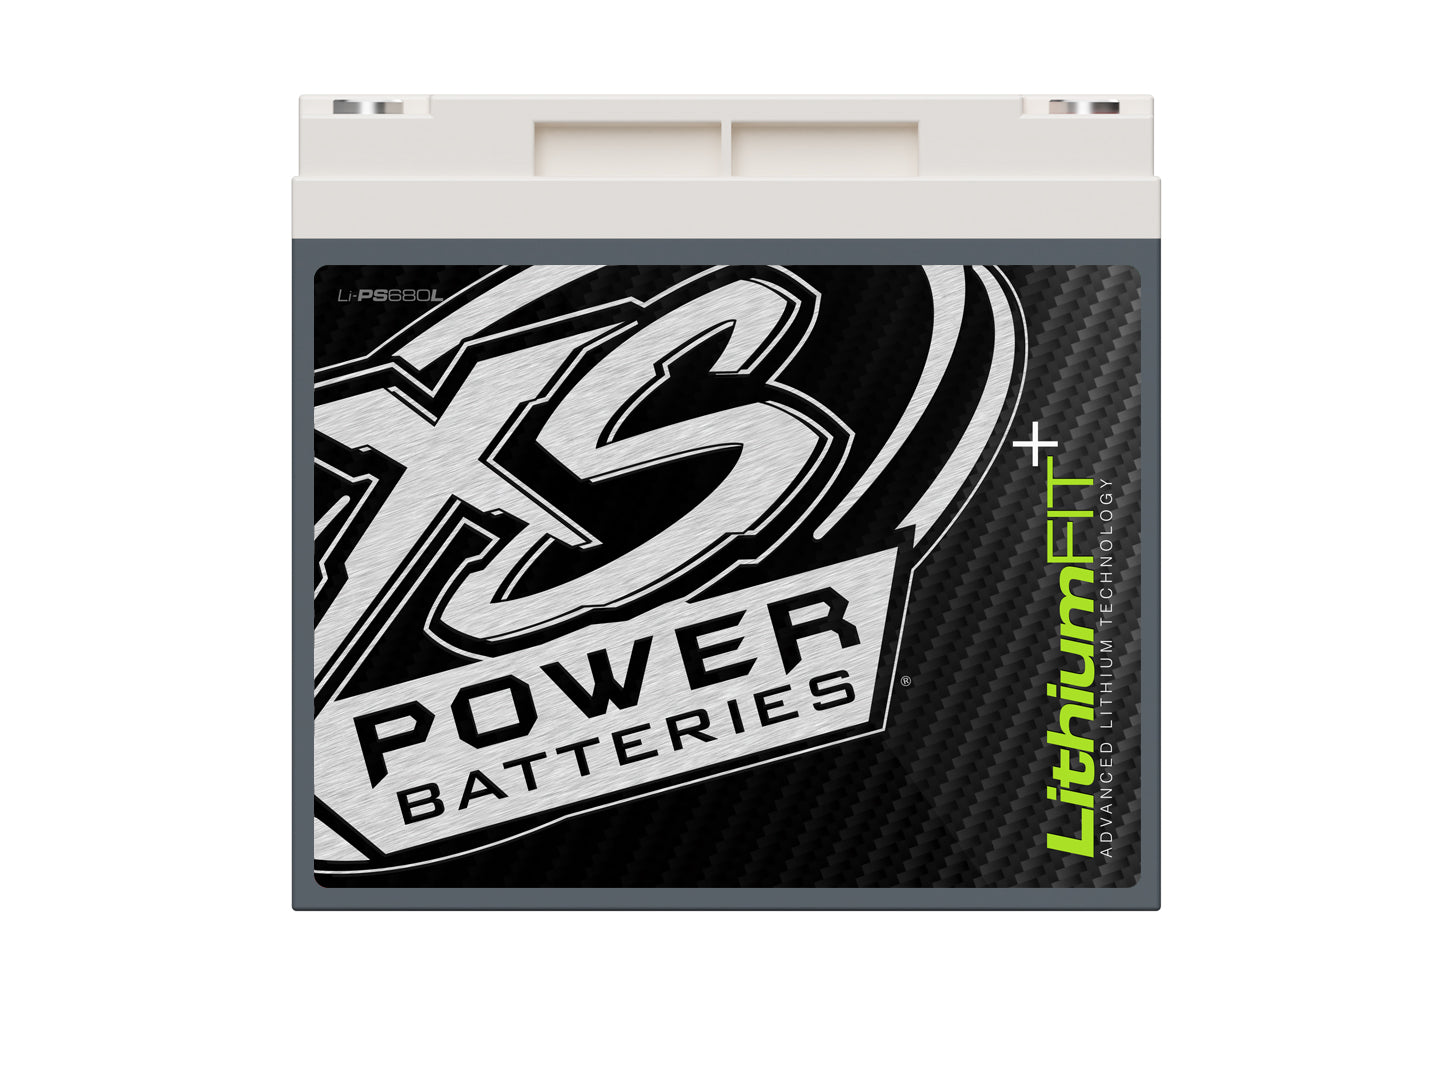 Li-PS680L XS Power 12VDC Lithium Powersports Battery 300A 16.5Ah